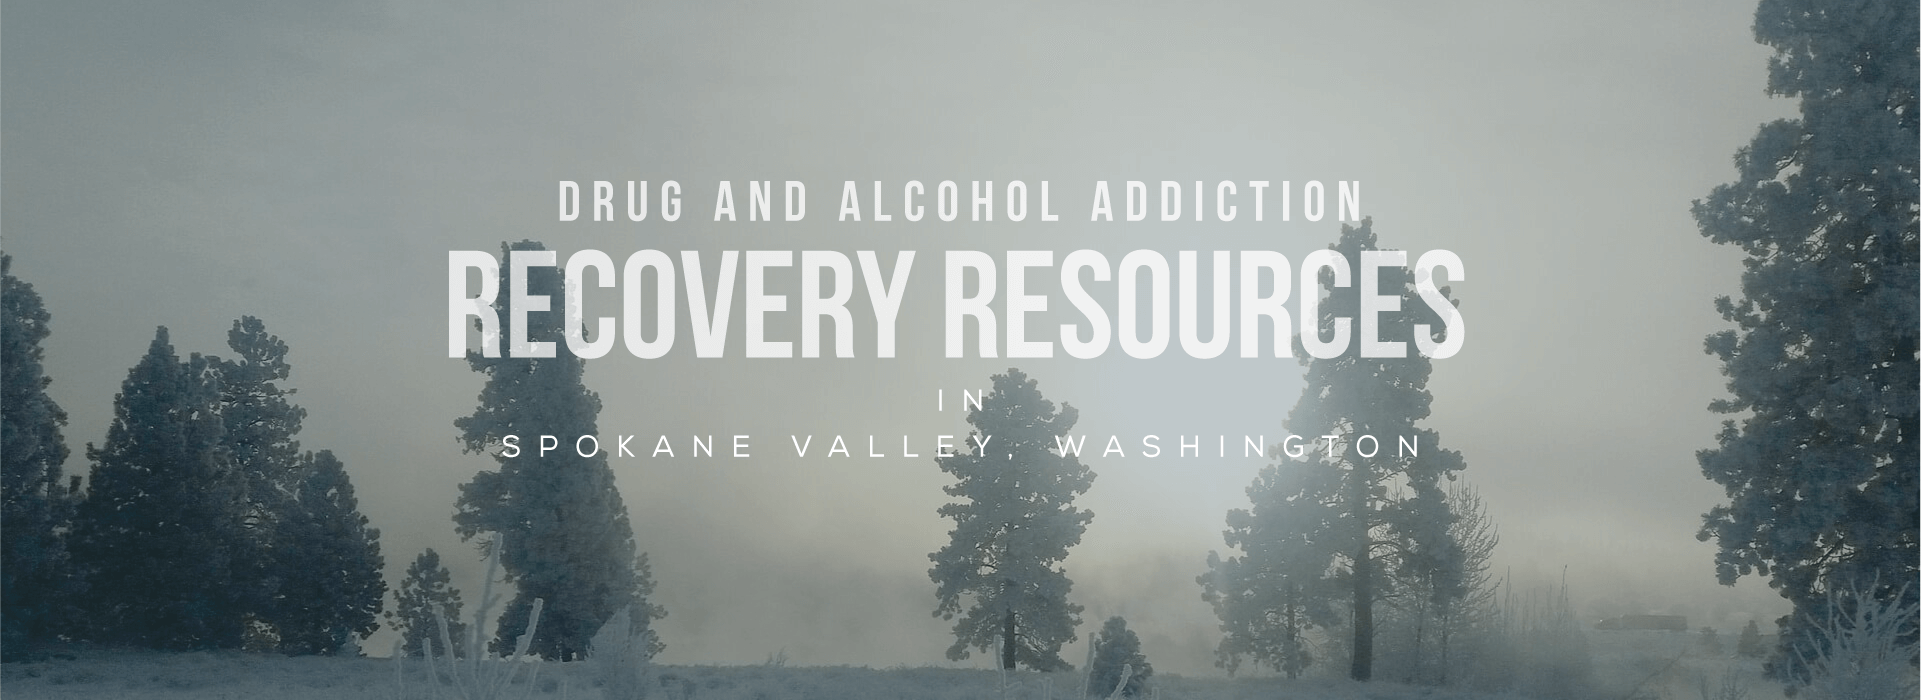 Spokane Valley, Washington Addiction Information